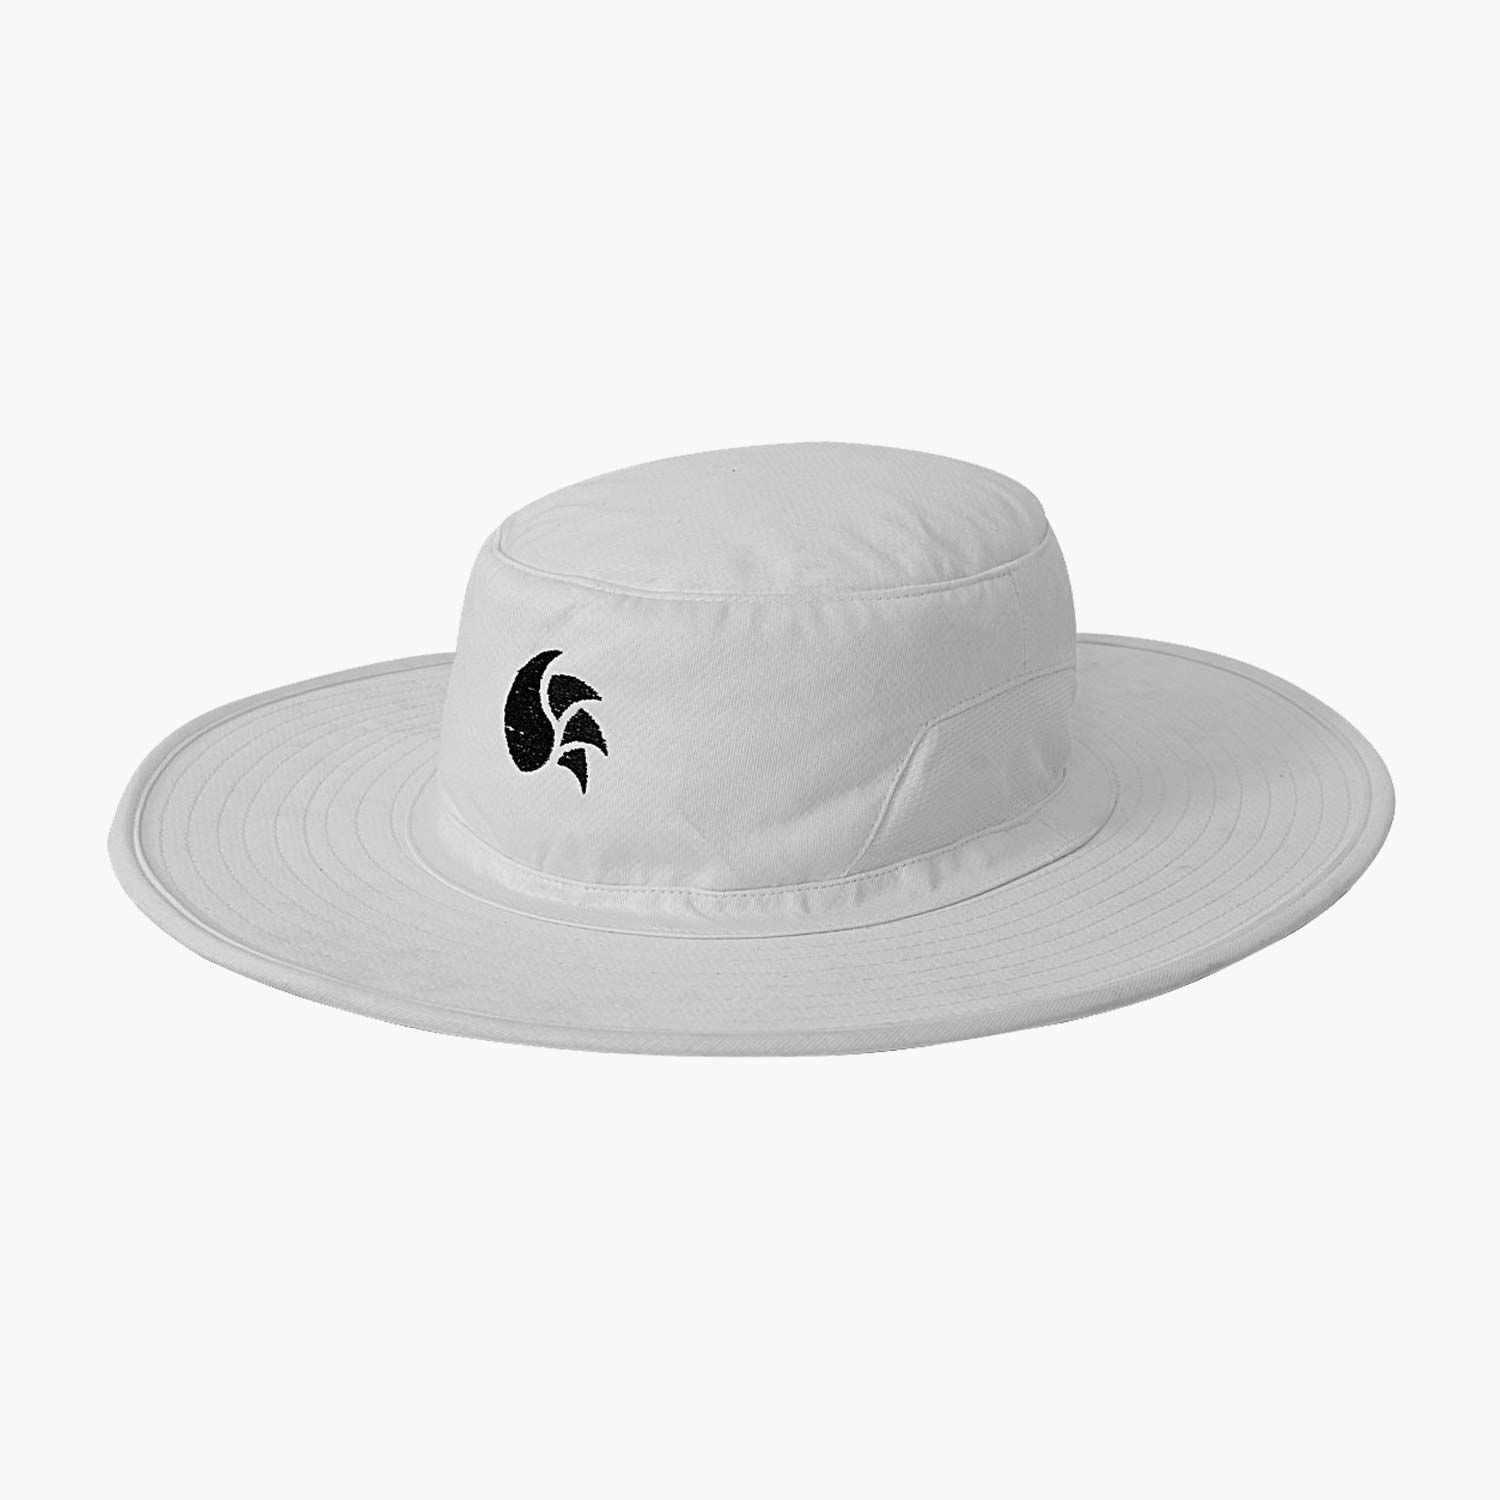 DSC FLITE PANAMA HAT - WHITE